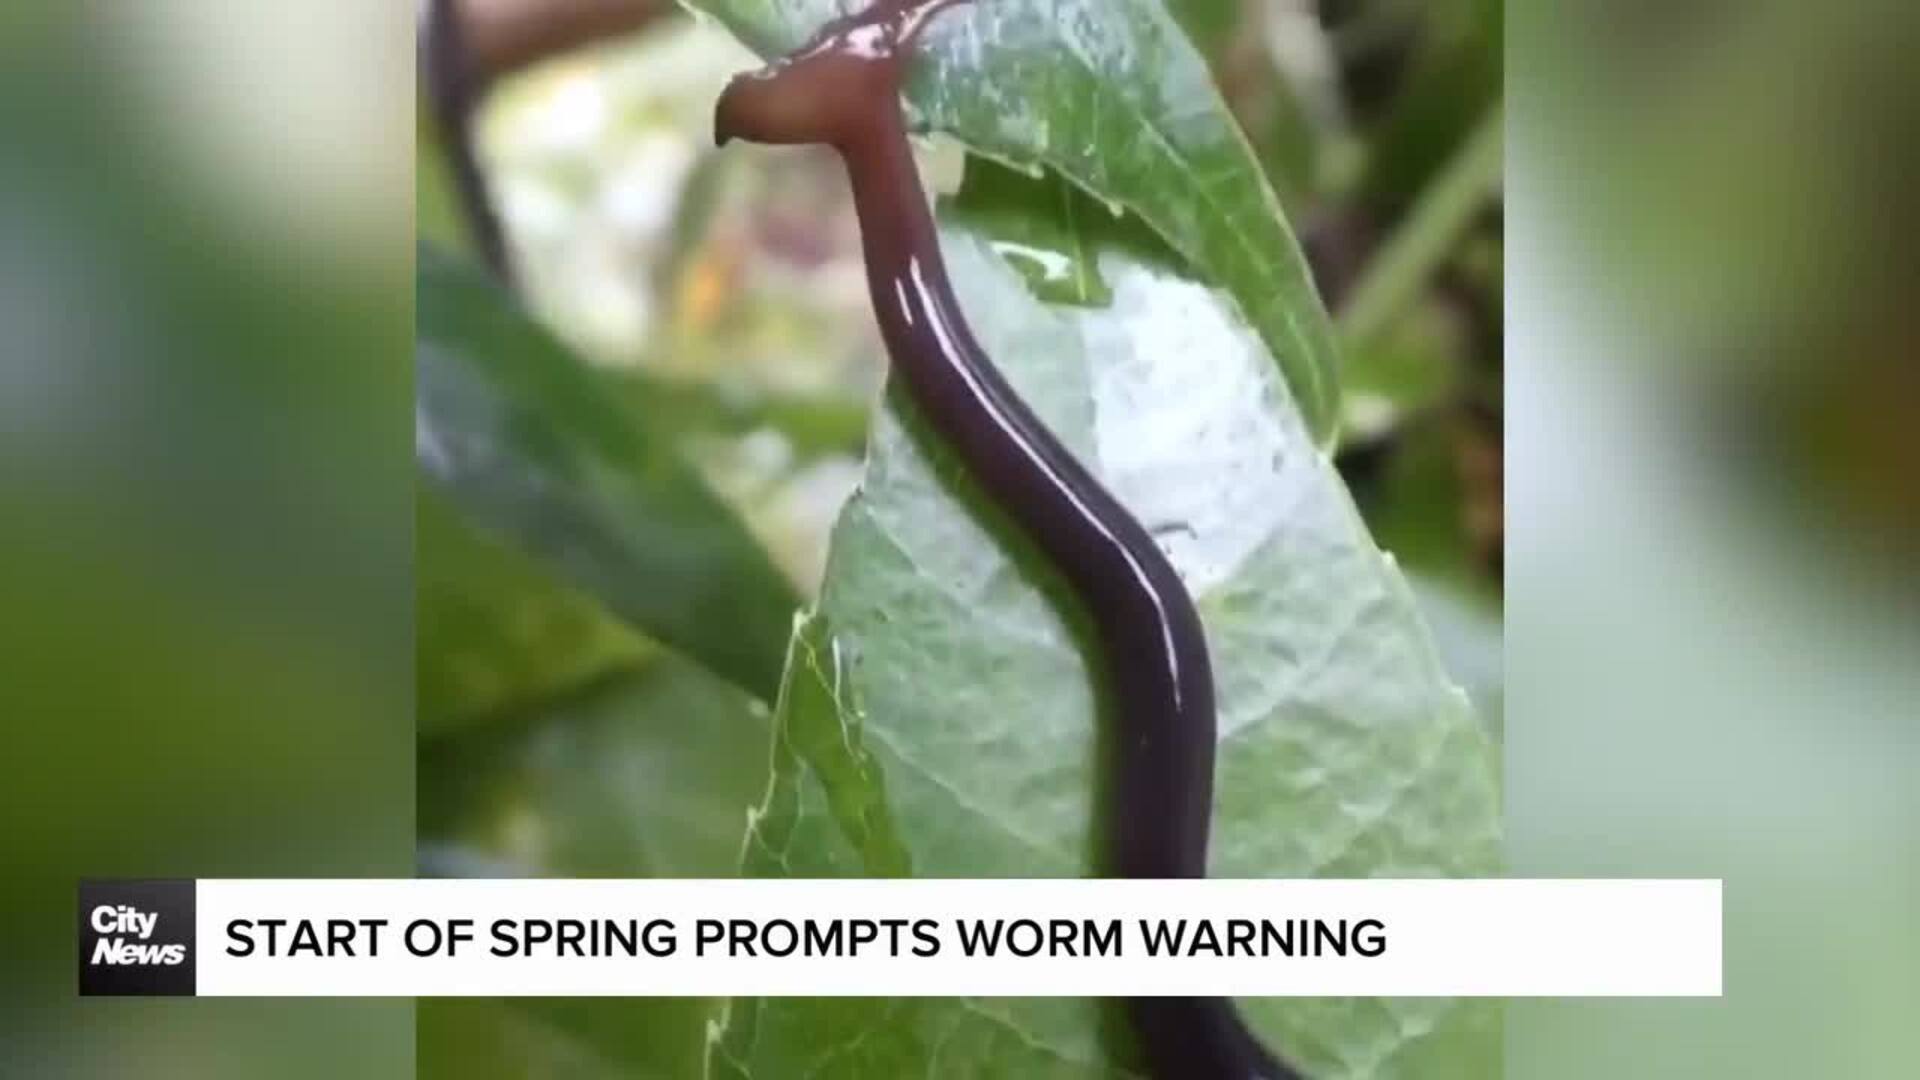 An invasive worm warning as spring starts